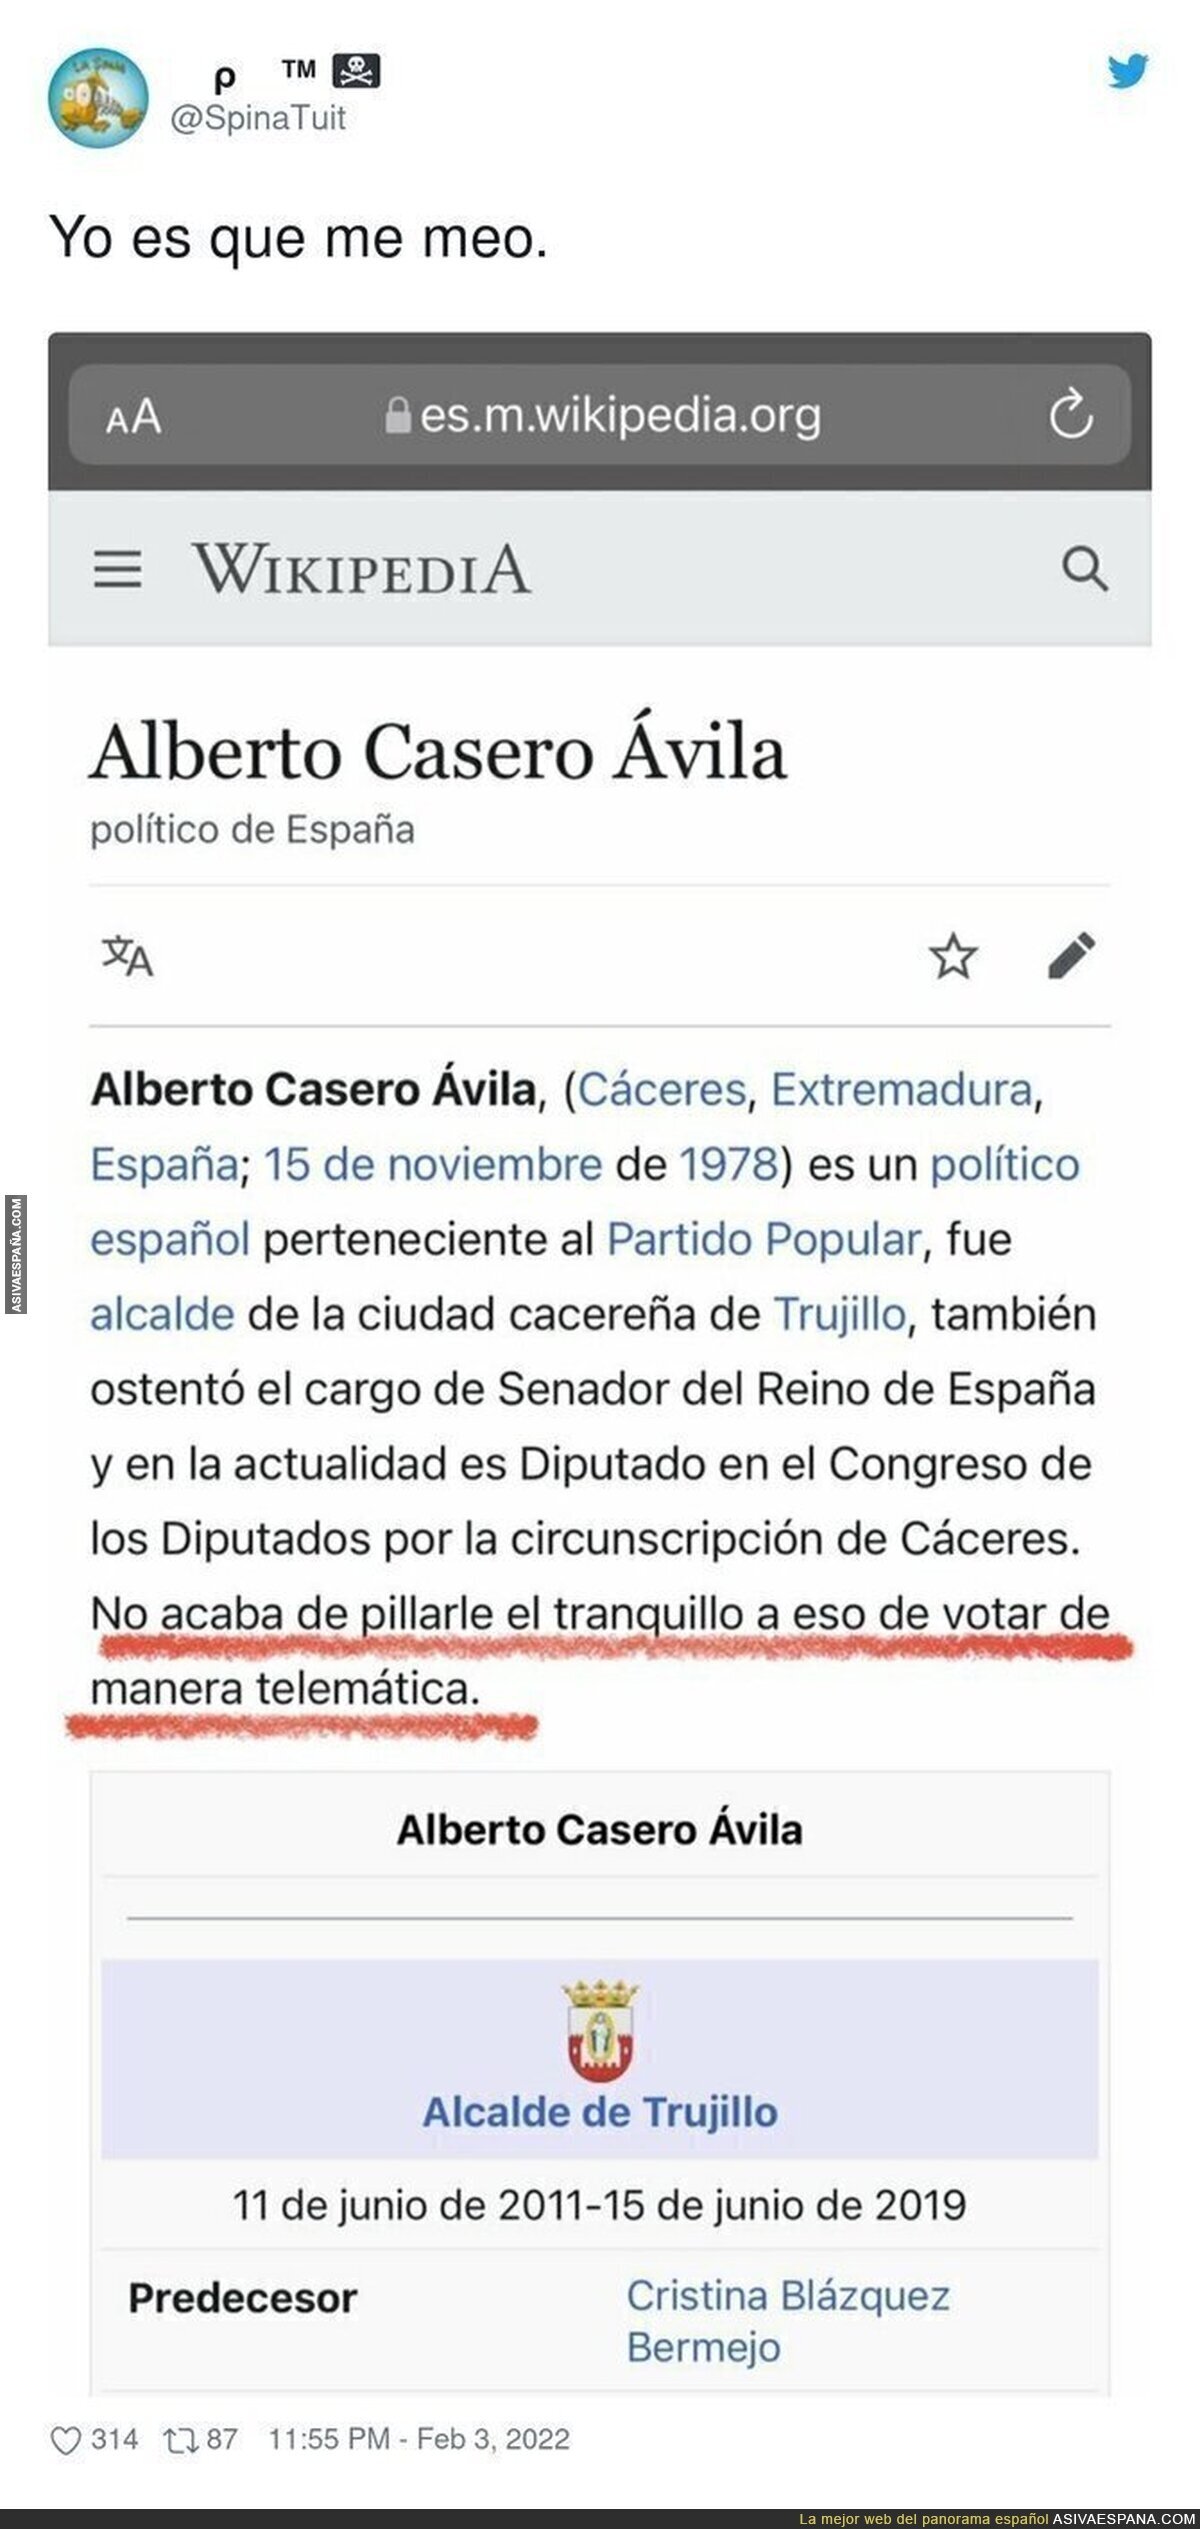 La Wikipedia de Alberto Casero explica todo sencillamente